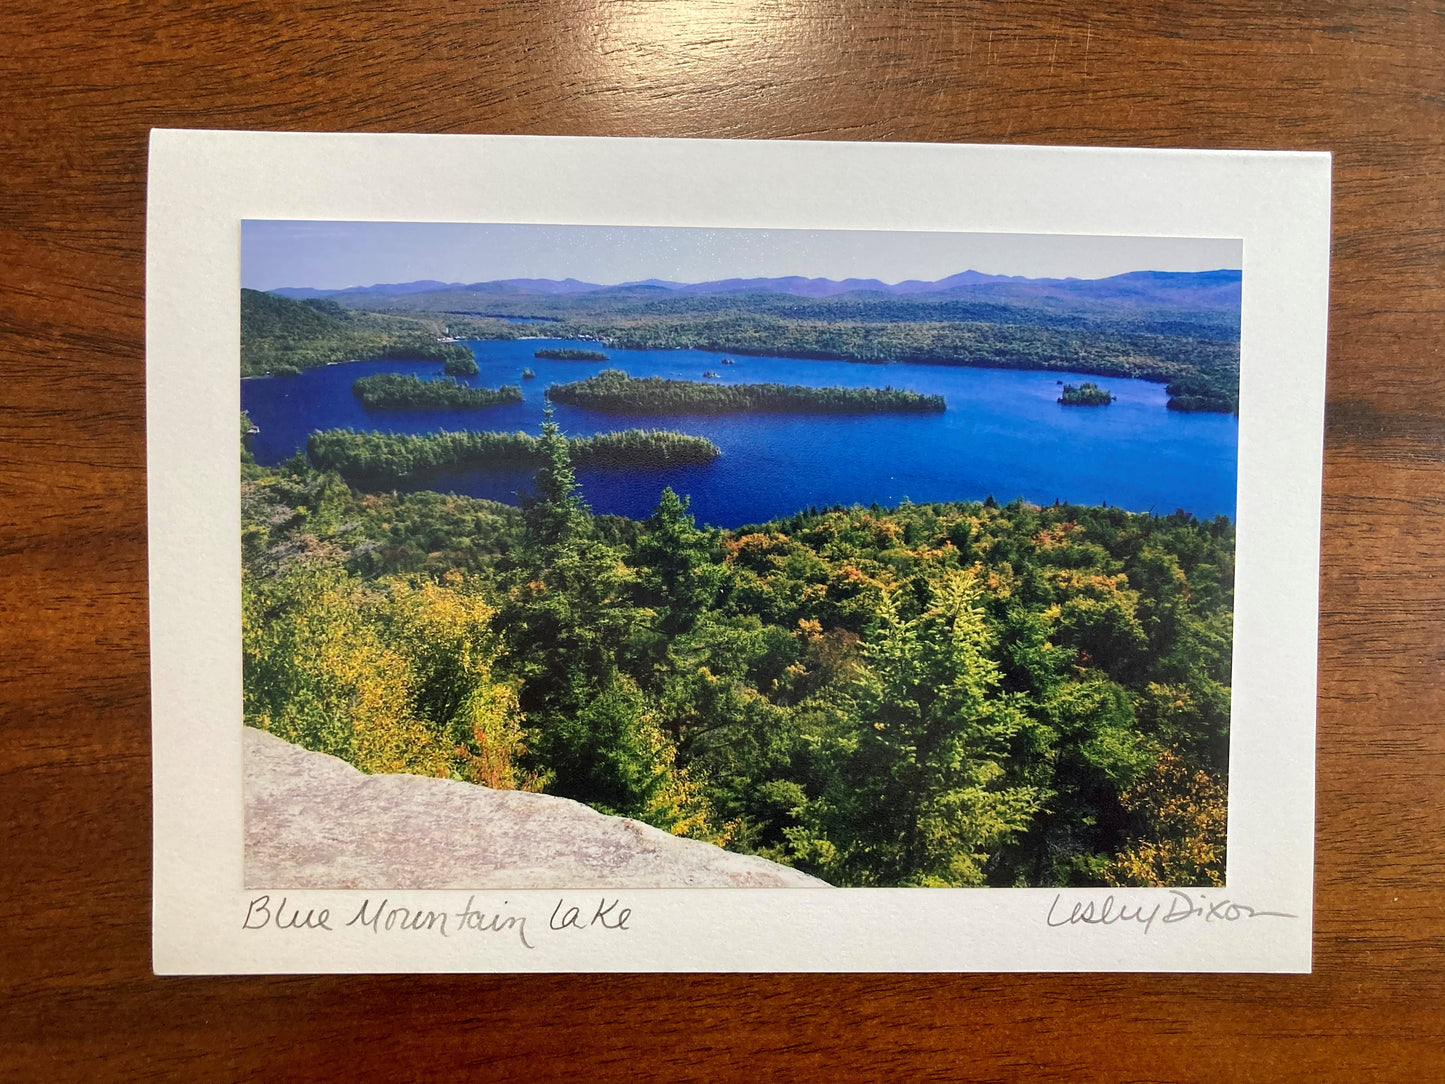 Adirondack Notecard Set